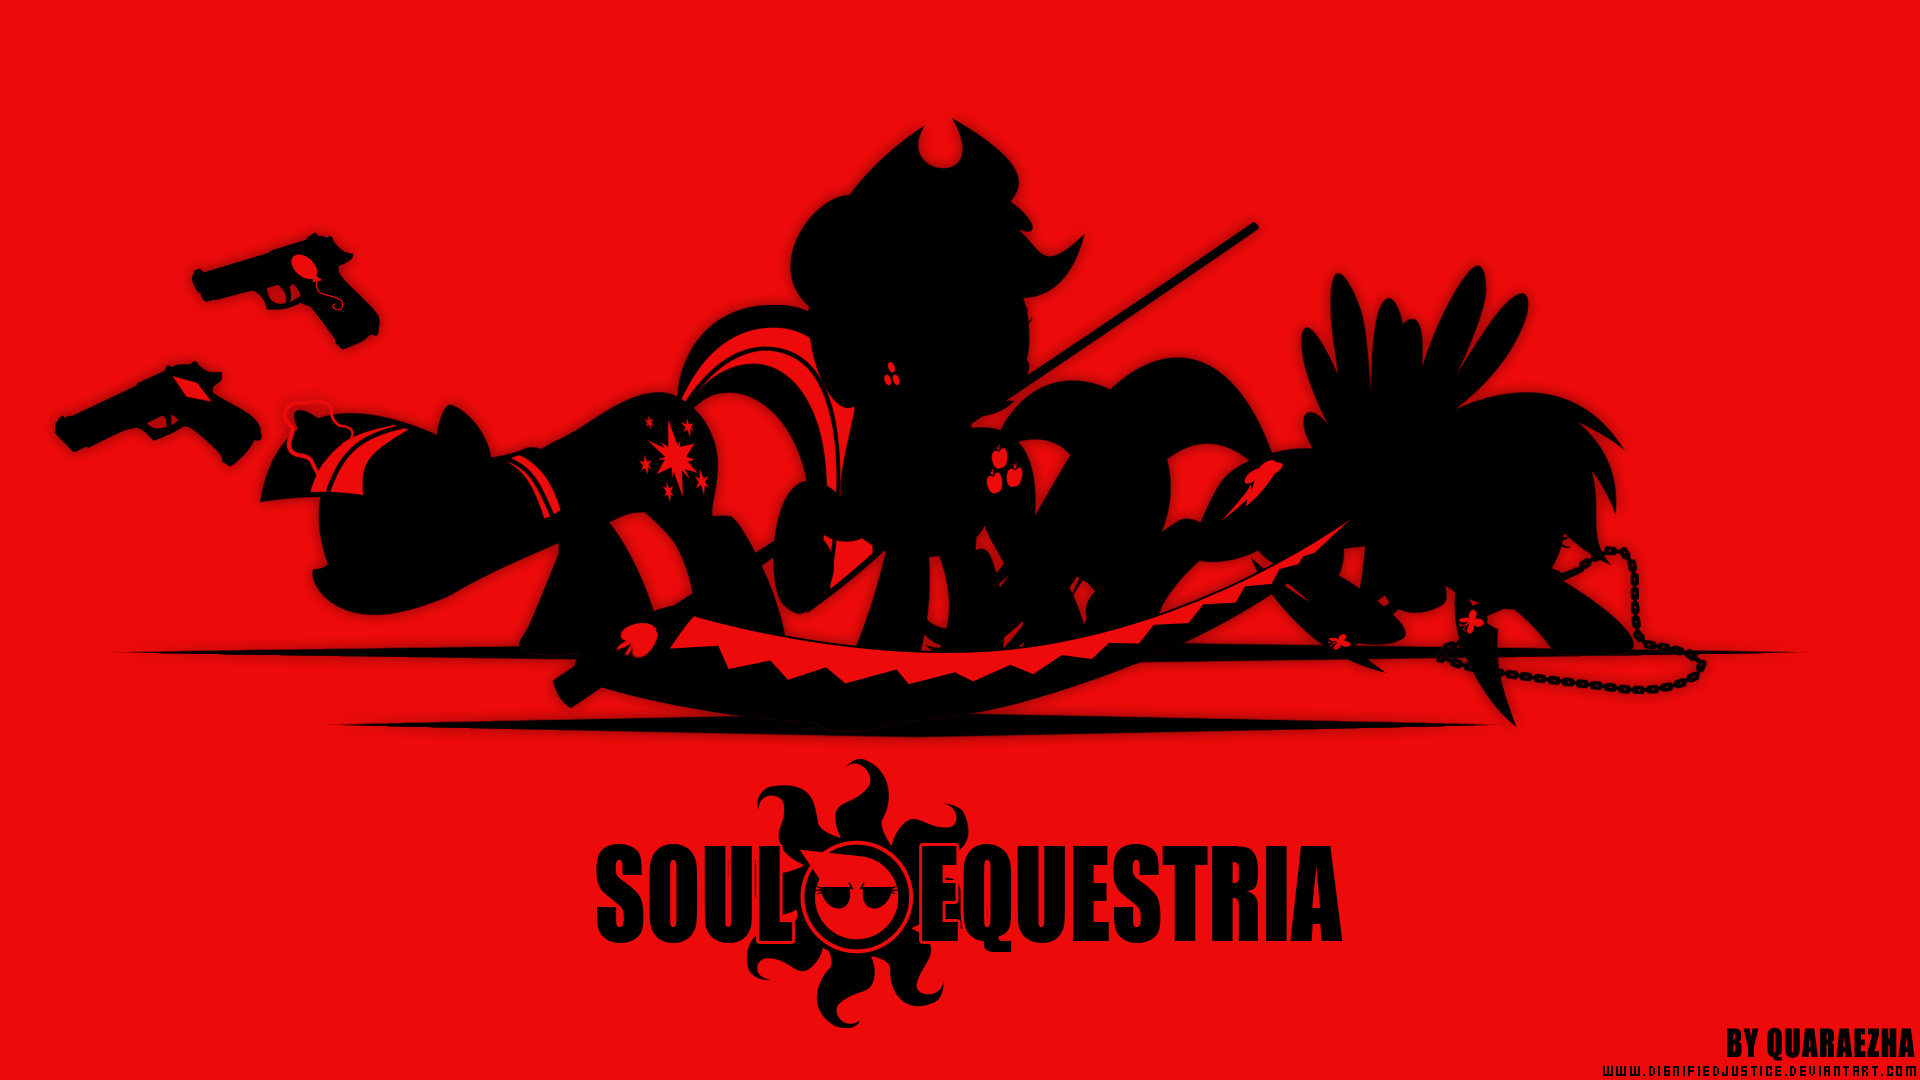 Soul Equestria by Chromadancer, KeinZantezuken, Paradigm-Zero and Peachspices